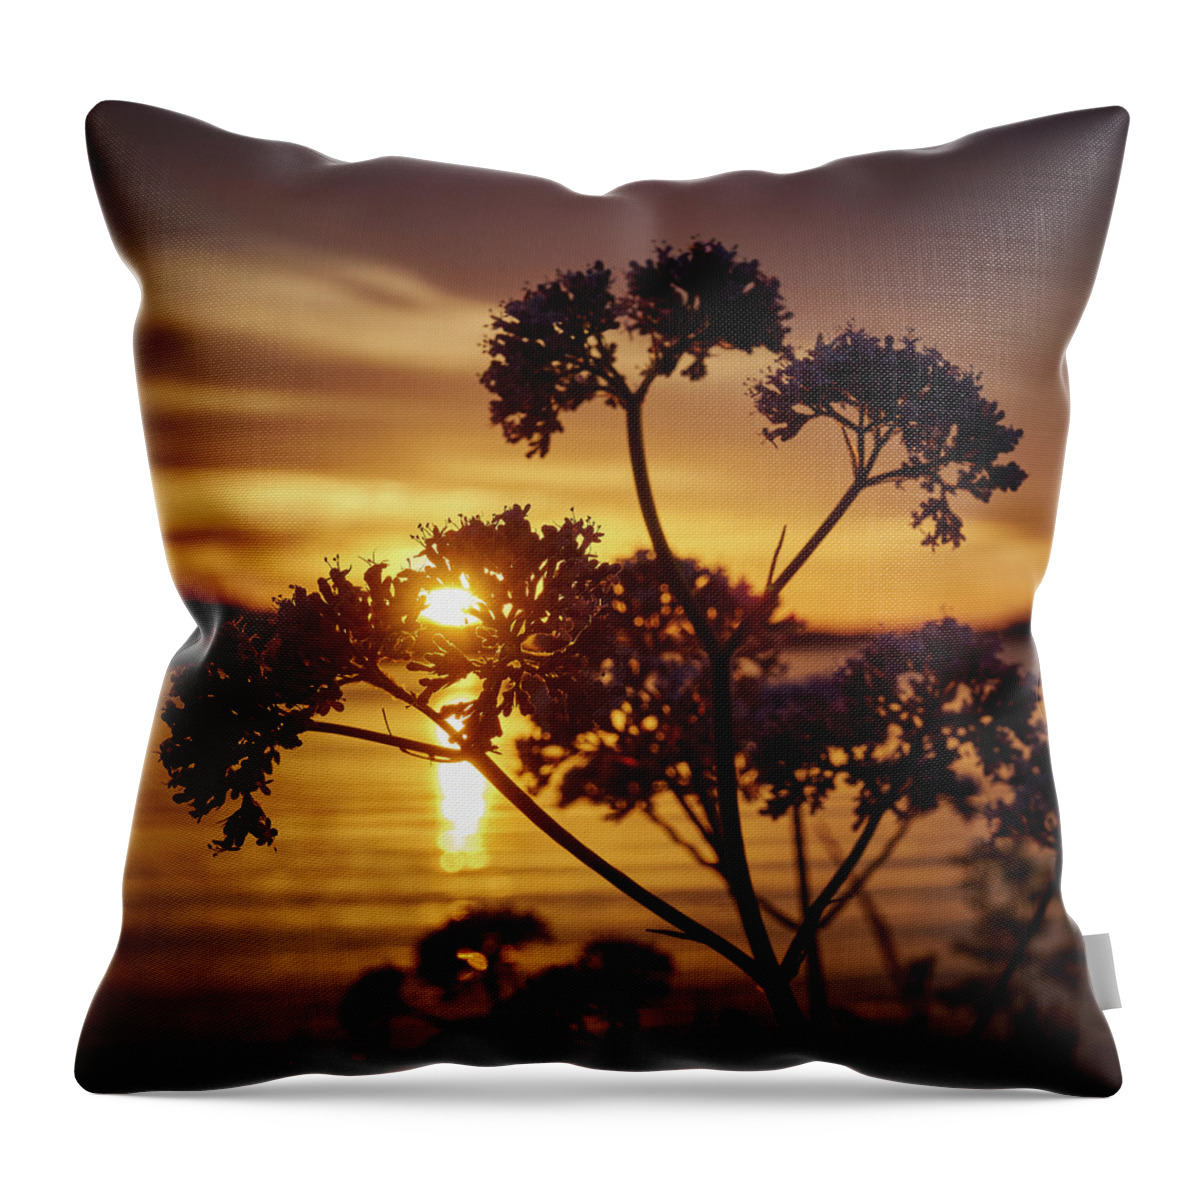 Finland Throw Pillow featuring the photograph Valerian sunset by Jouko Lehto